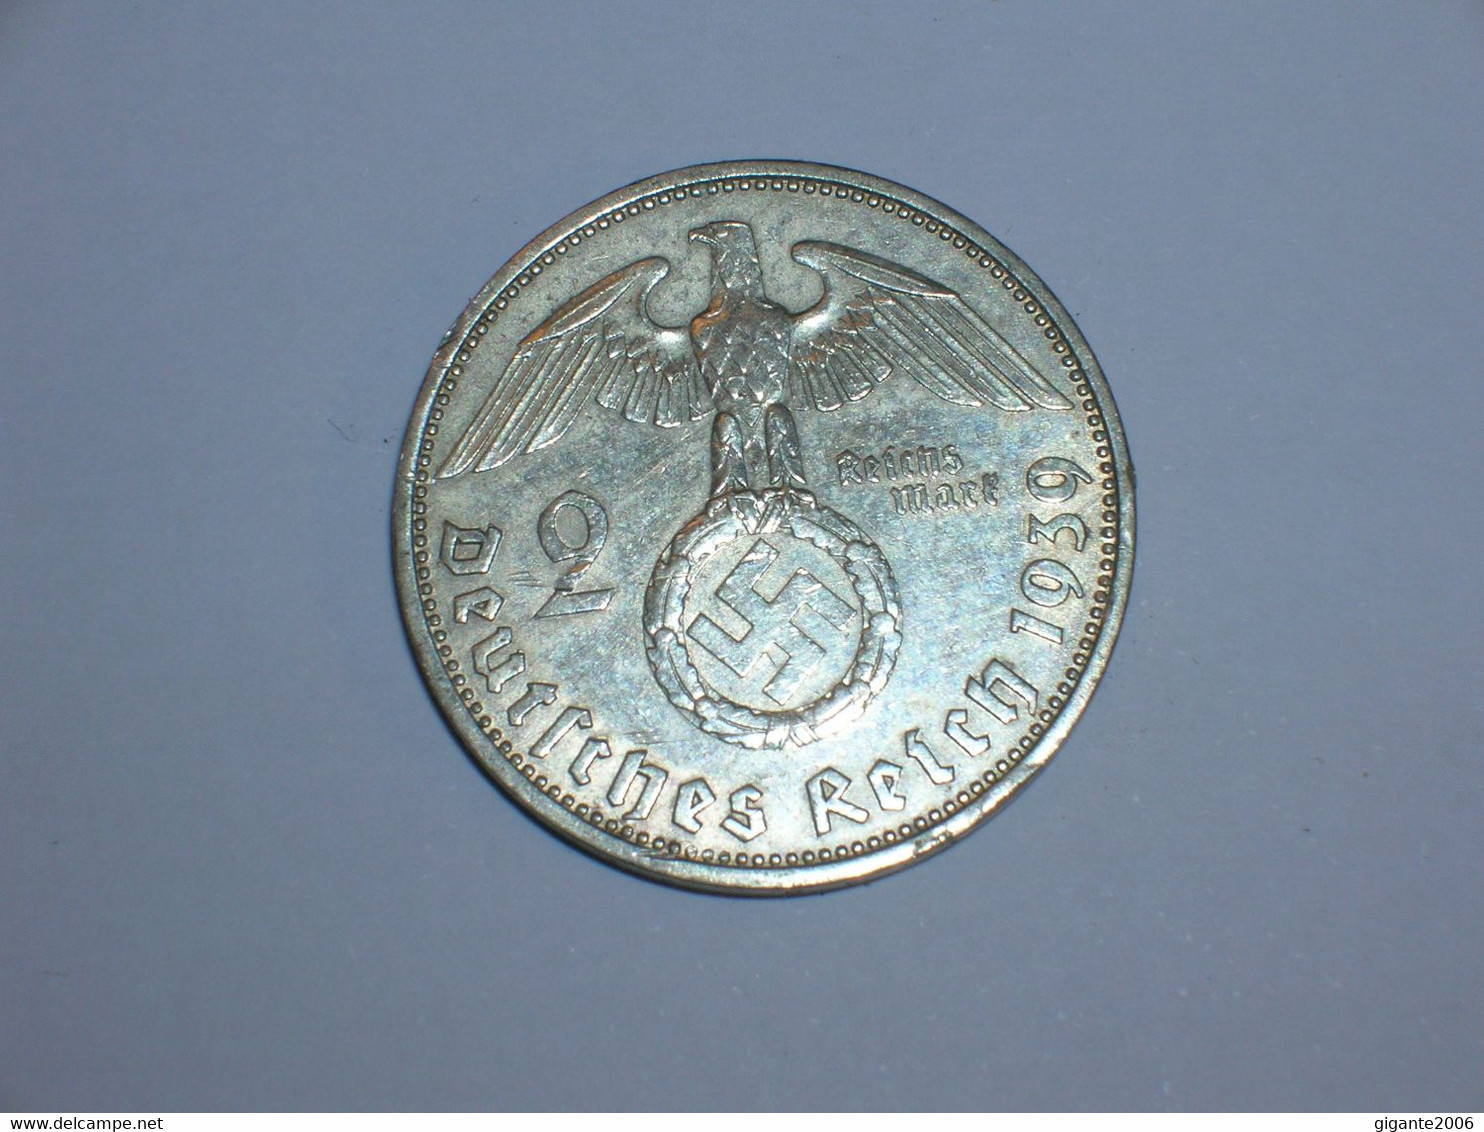 ALEMANIA 2 MARCOS PLATA 1939 A (Hindenburg) (5556) - 2 Reichsmark